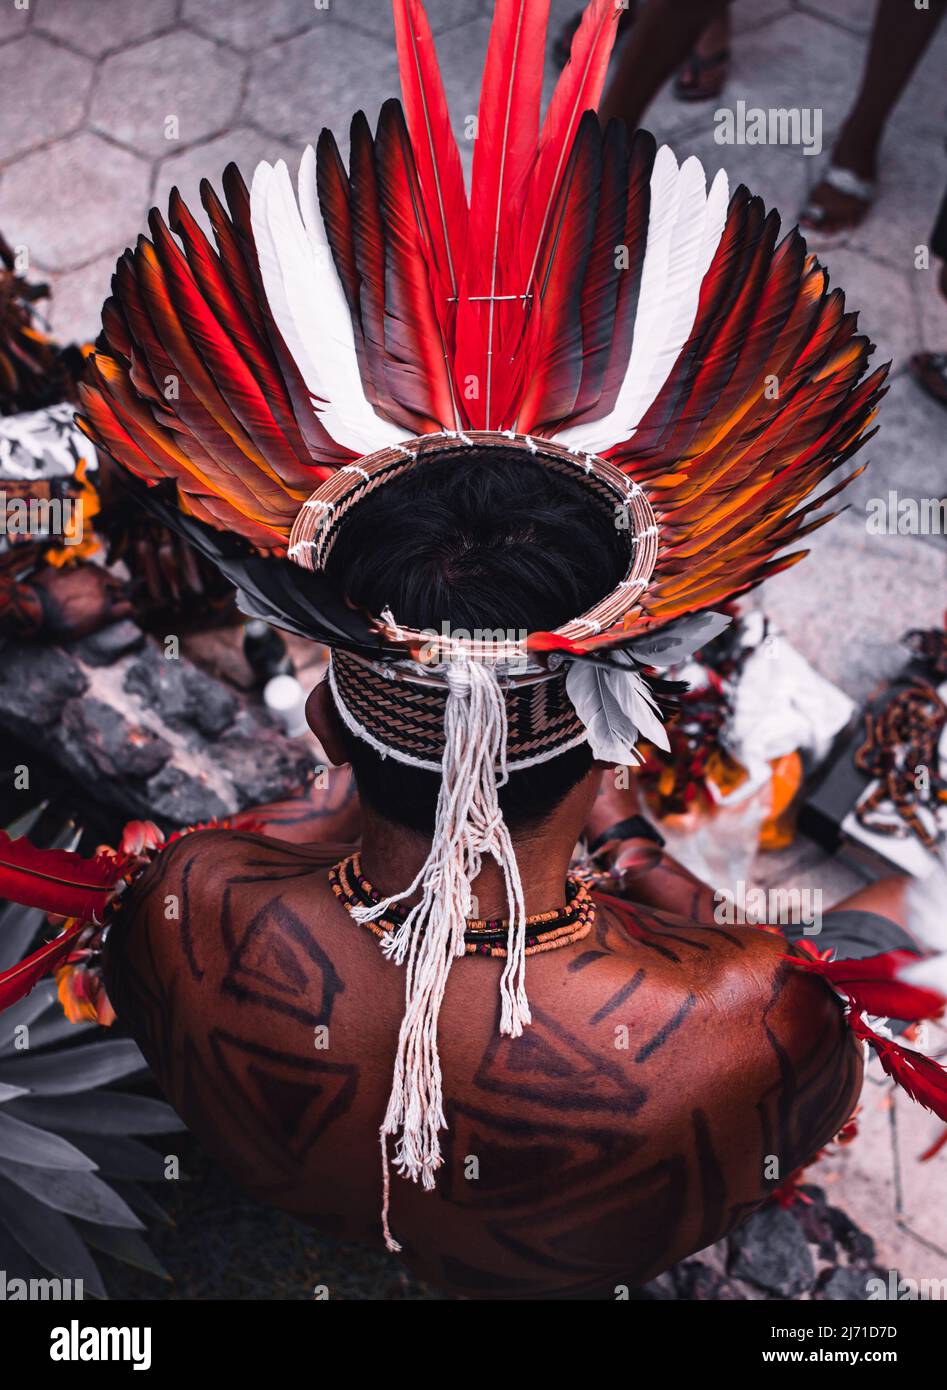 Indigenous man from a Brazilian Amazon tribe wearing colourful feather headdress known as cocar. Xingu River, Amazon, Brazil. 2009. Stock Photo